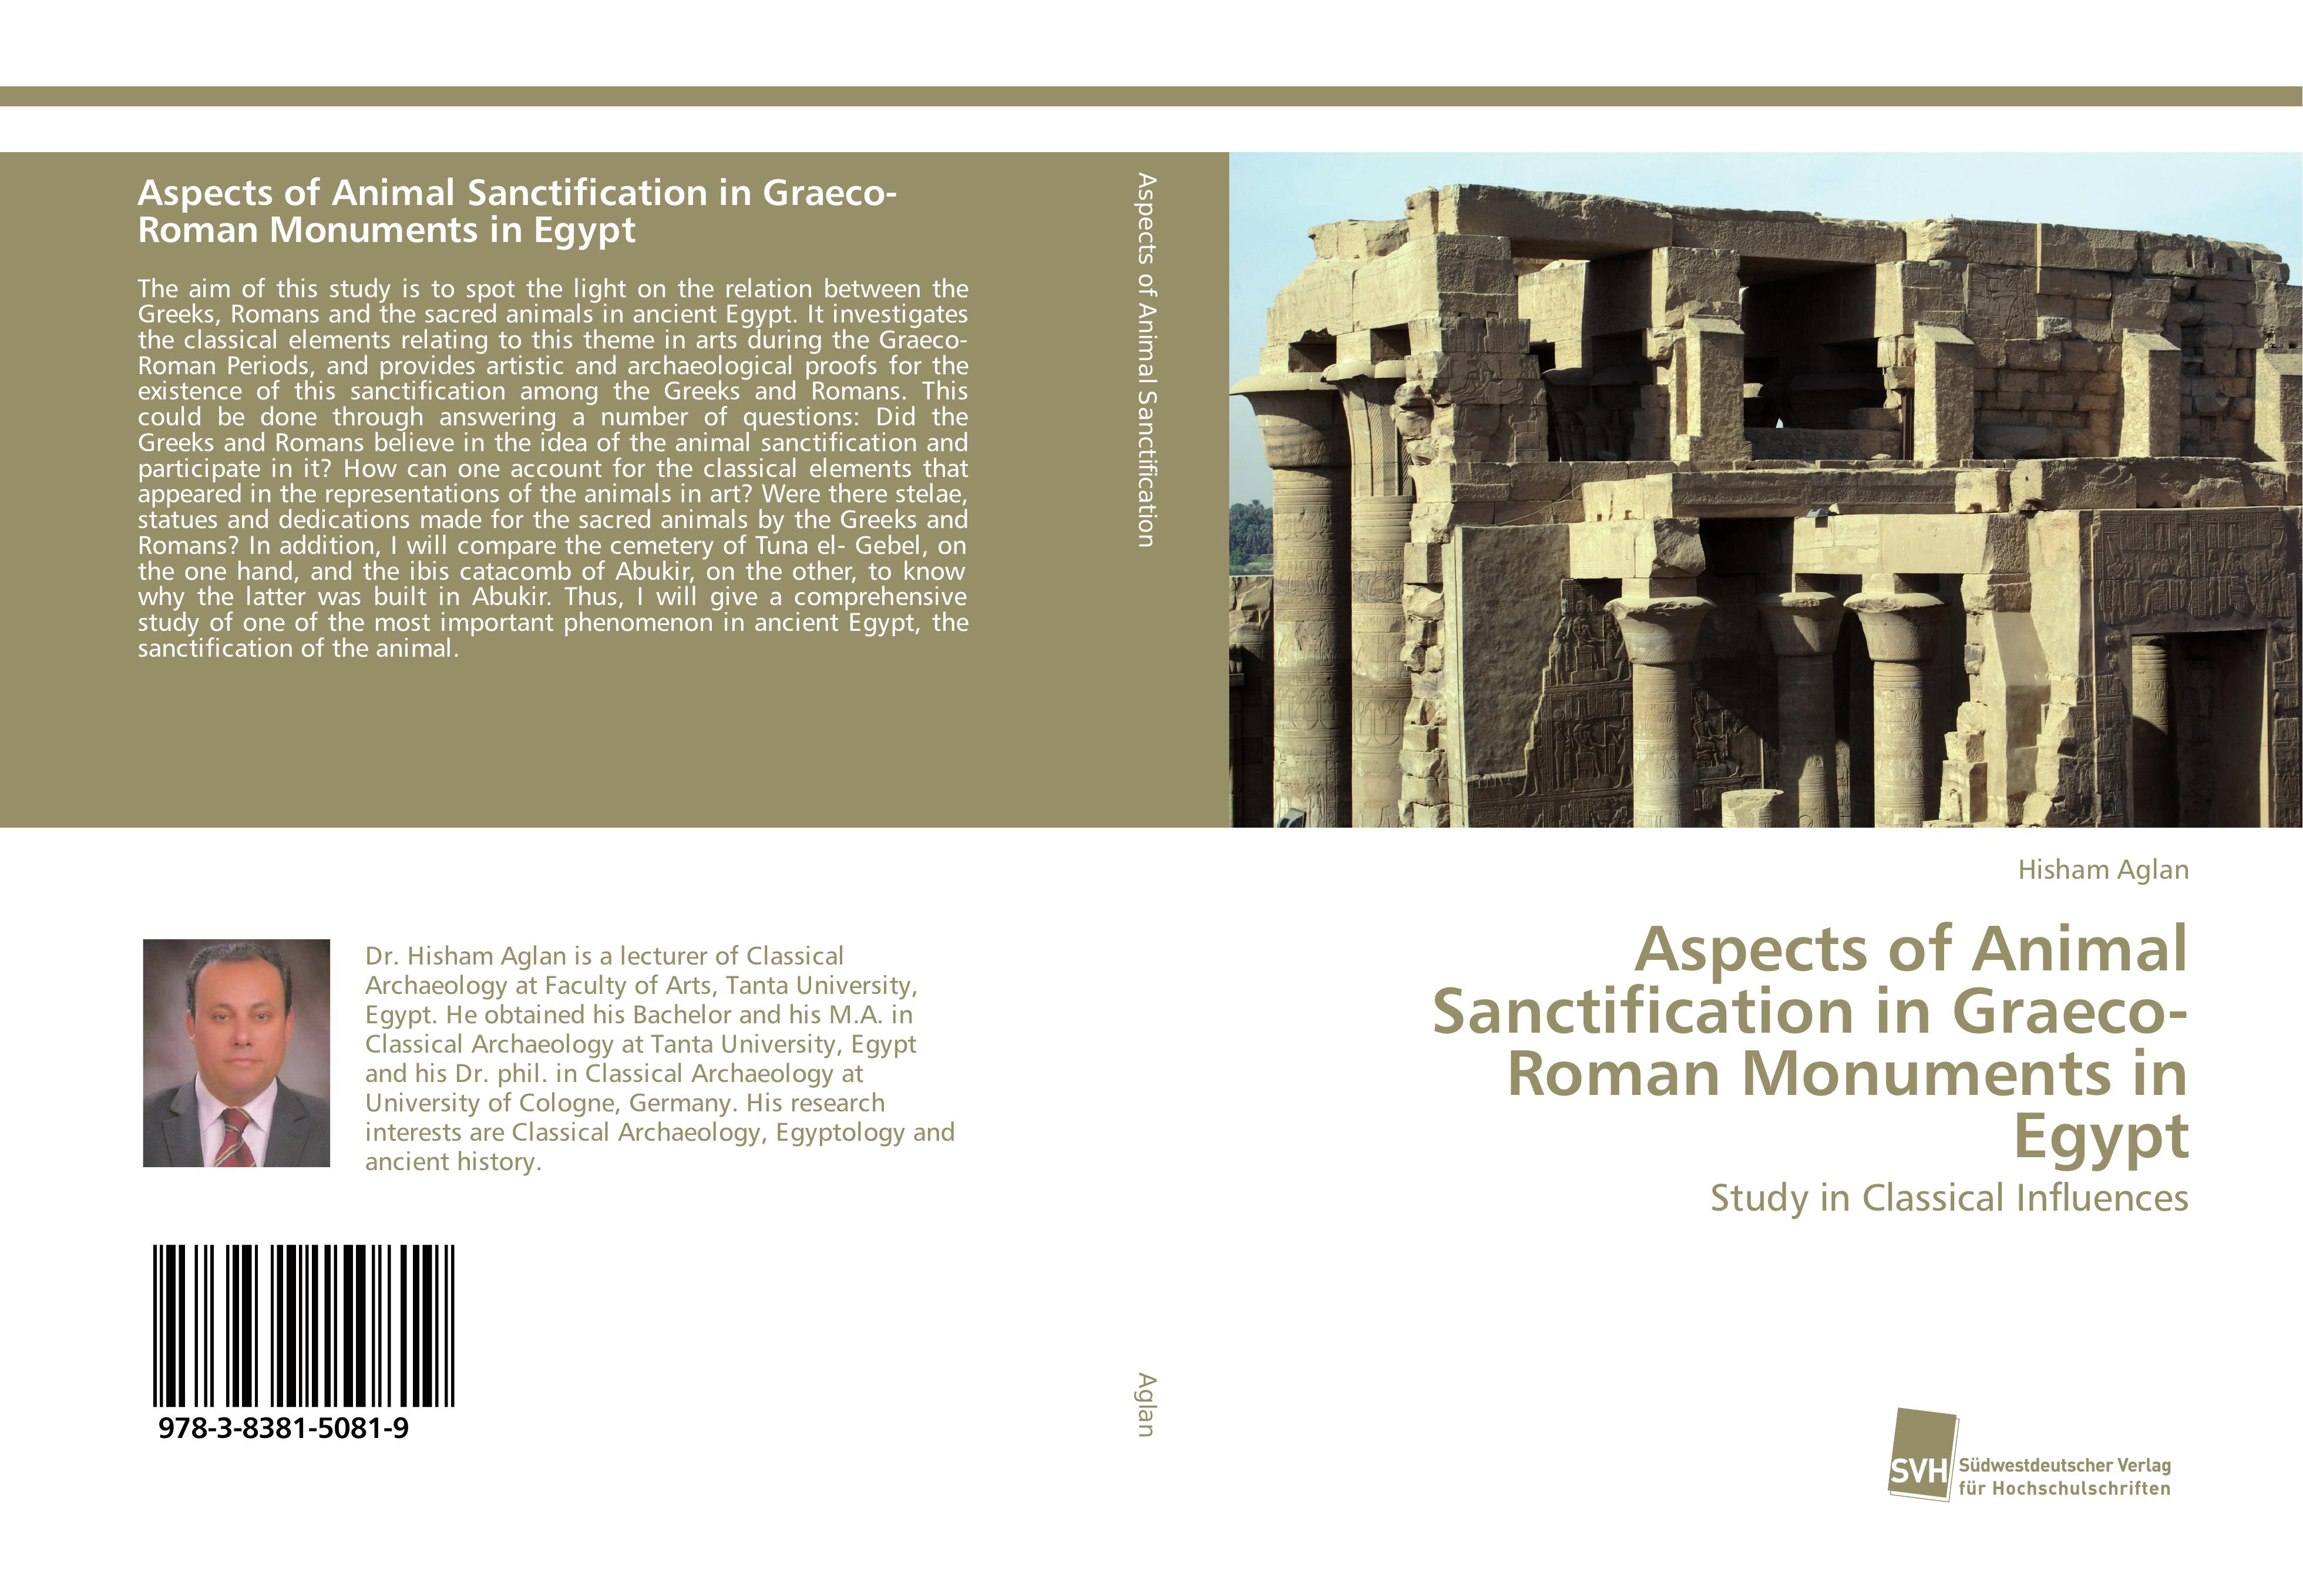 Aspects of Animal Sanctification in Graeco-Roman Monuments in Egypt - Hisham Aglan